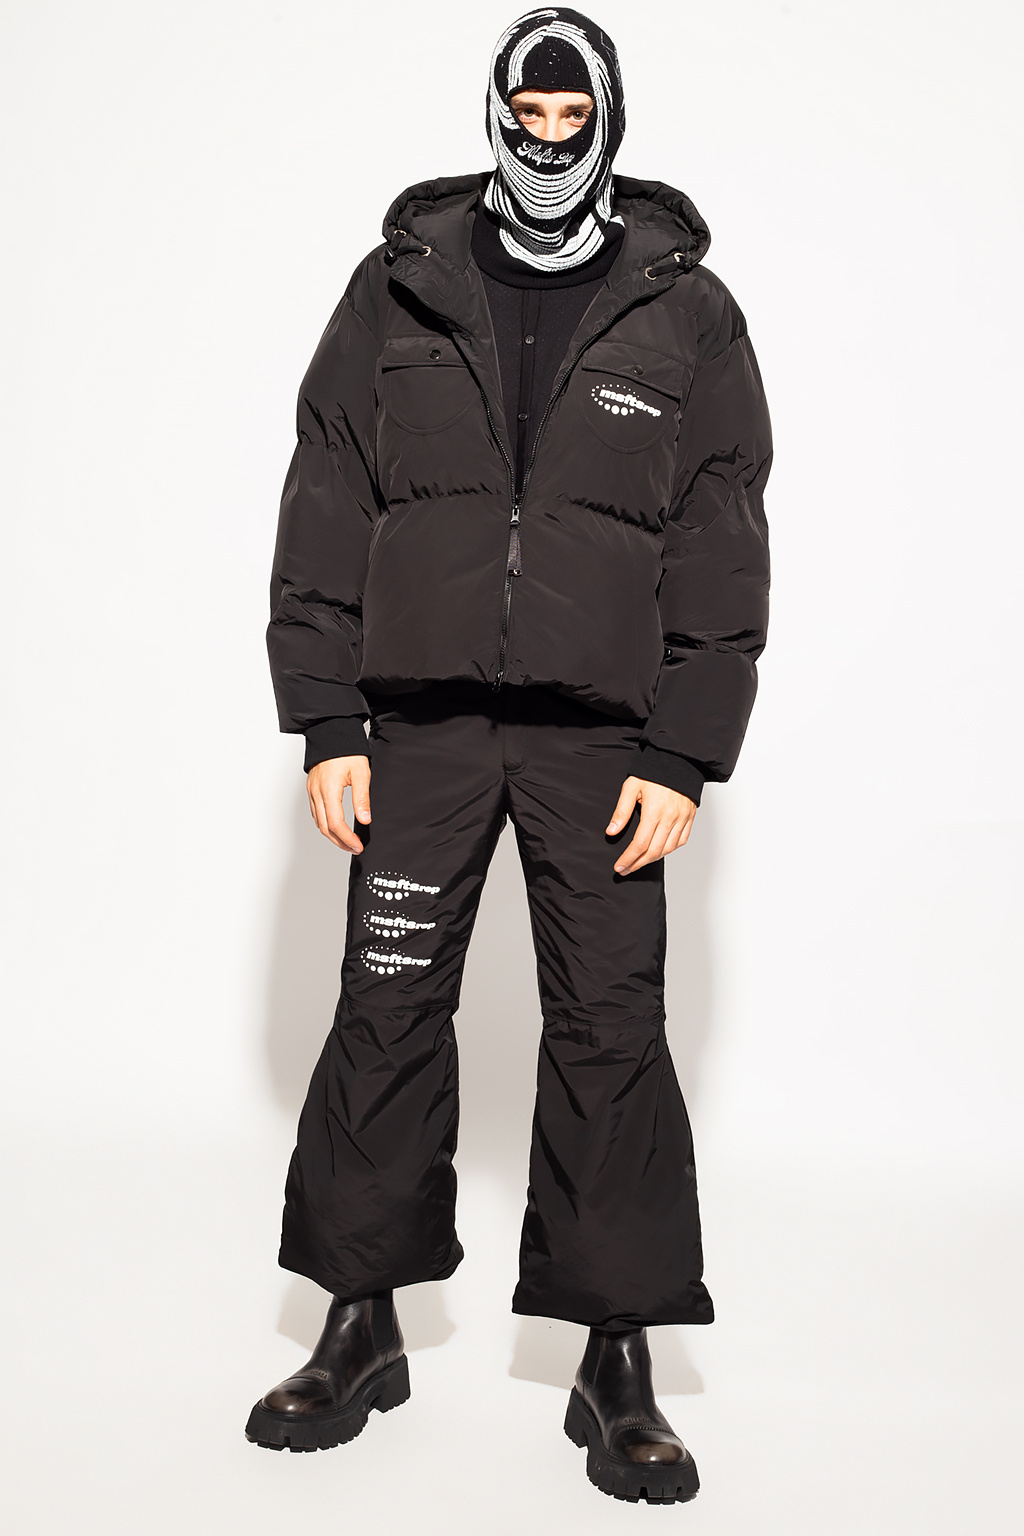 MSFTSrep Snow pants | Men's Clothing | Vitkac